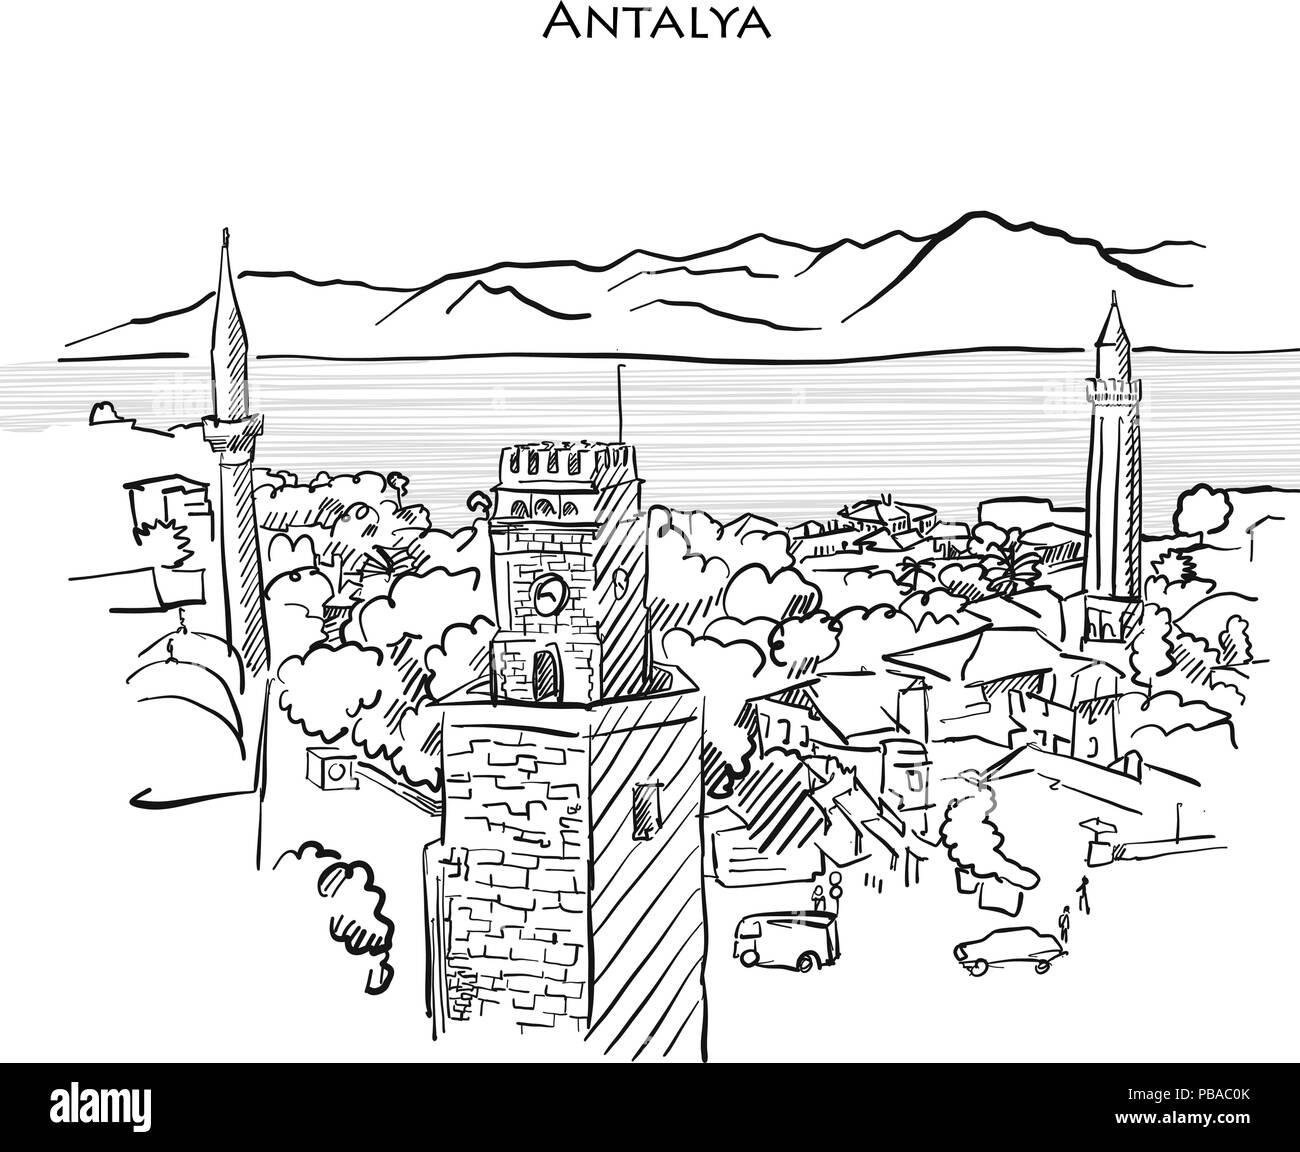 Antalya Travel Sketch. Hand-drawn vector illustration of Antalya old town. Stock Vector